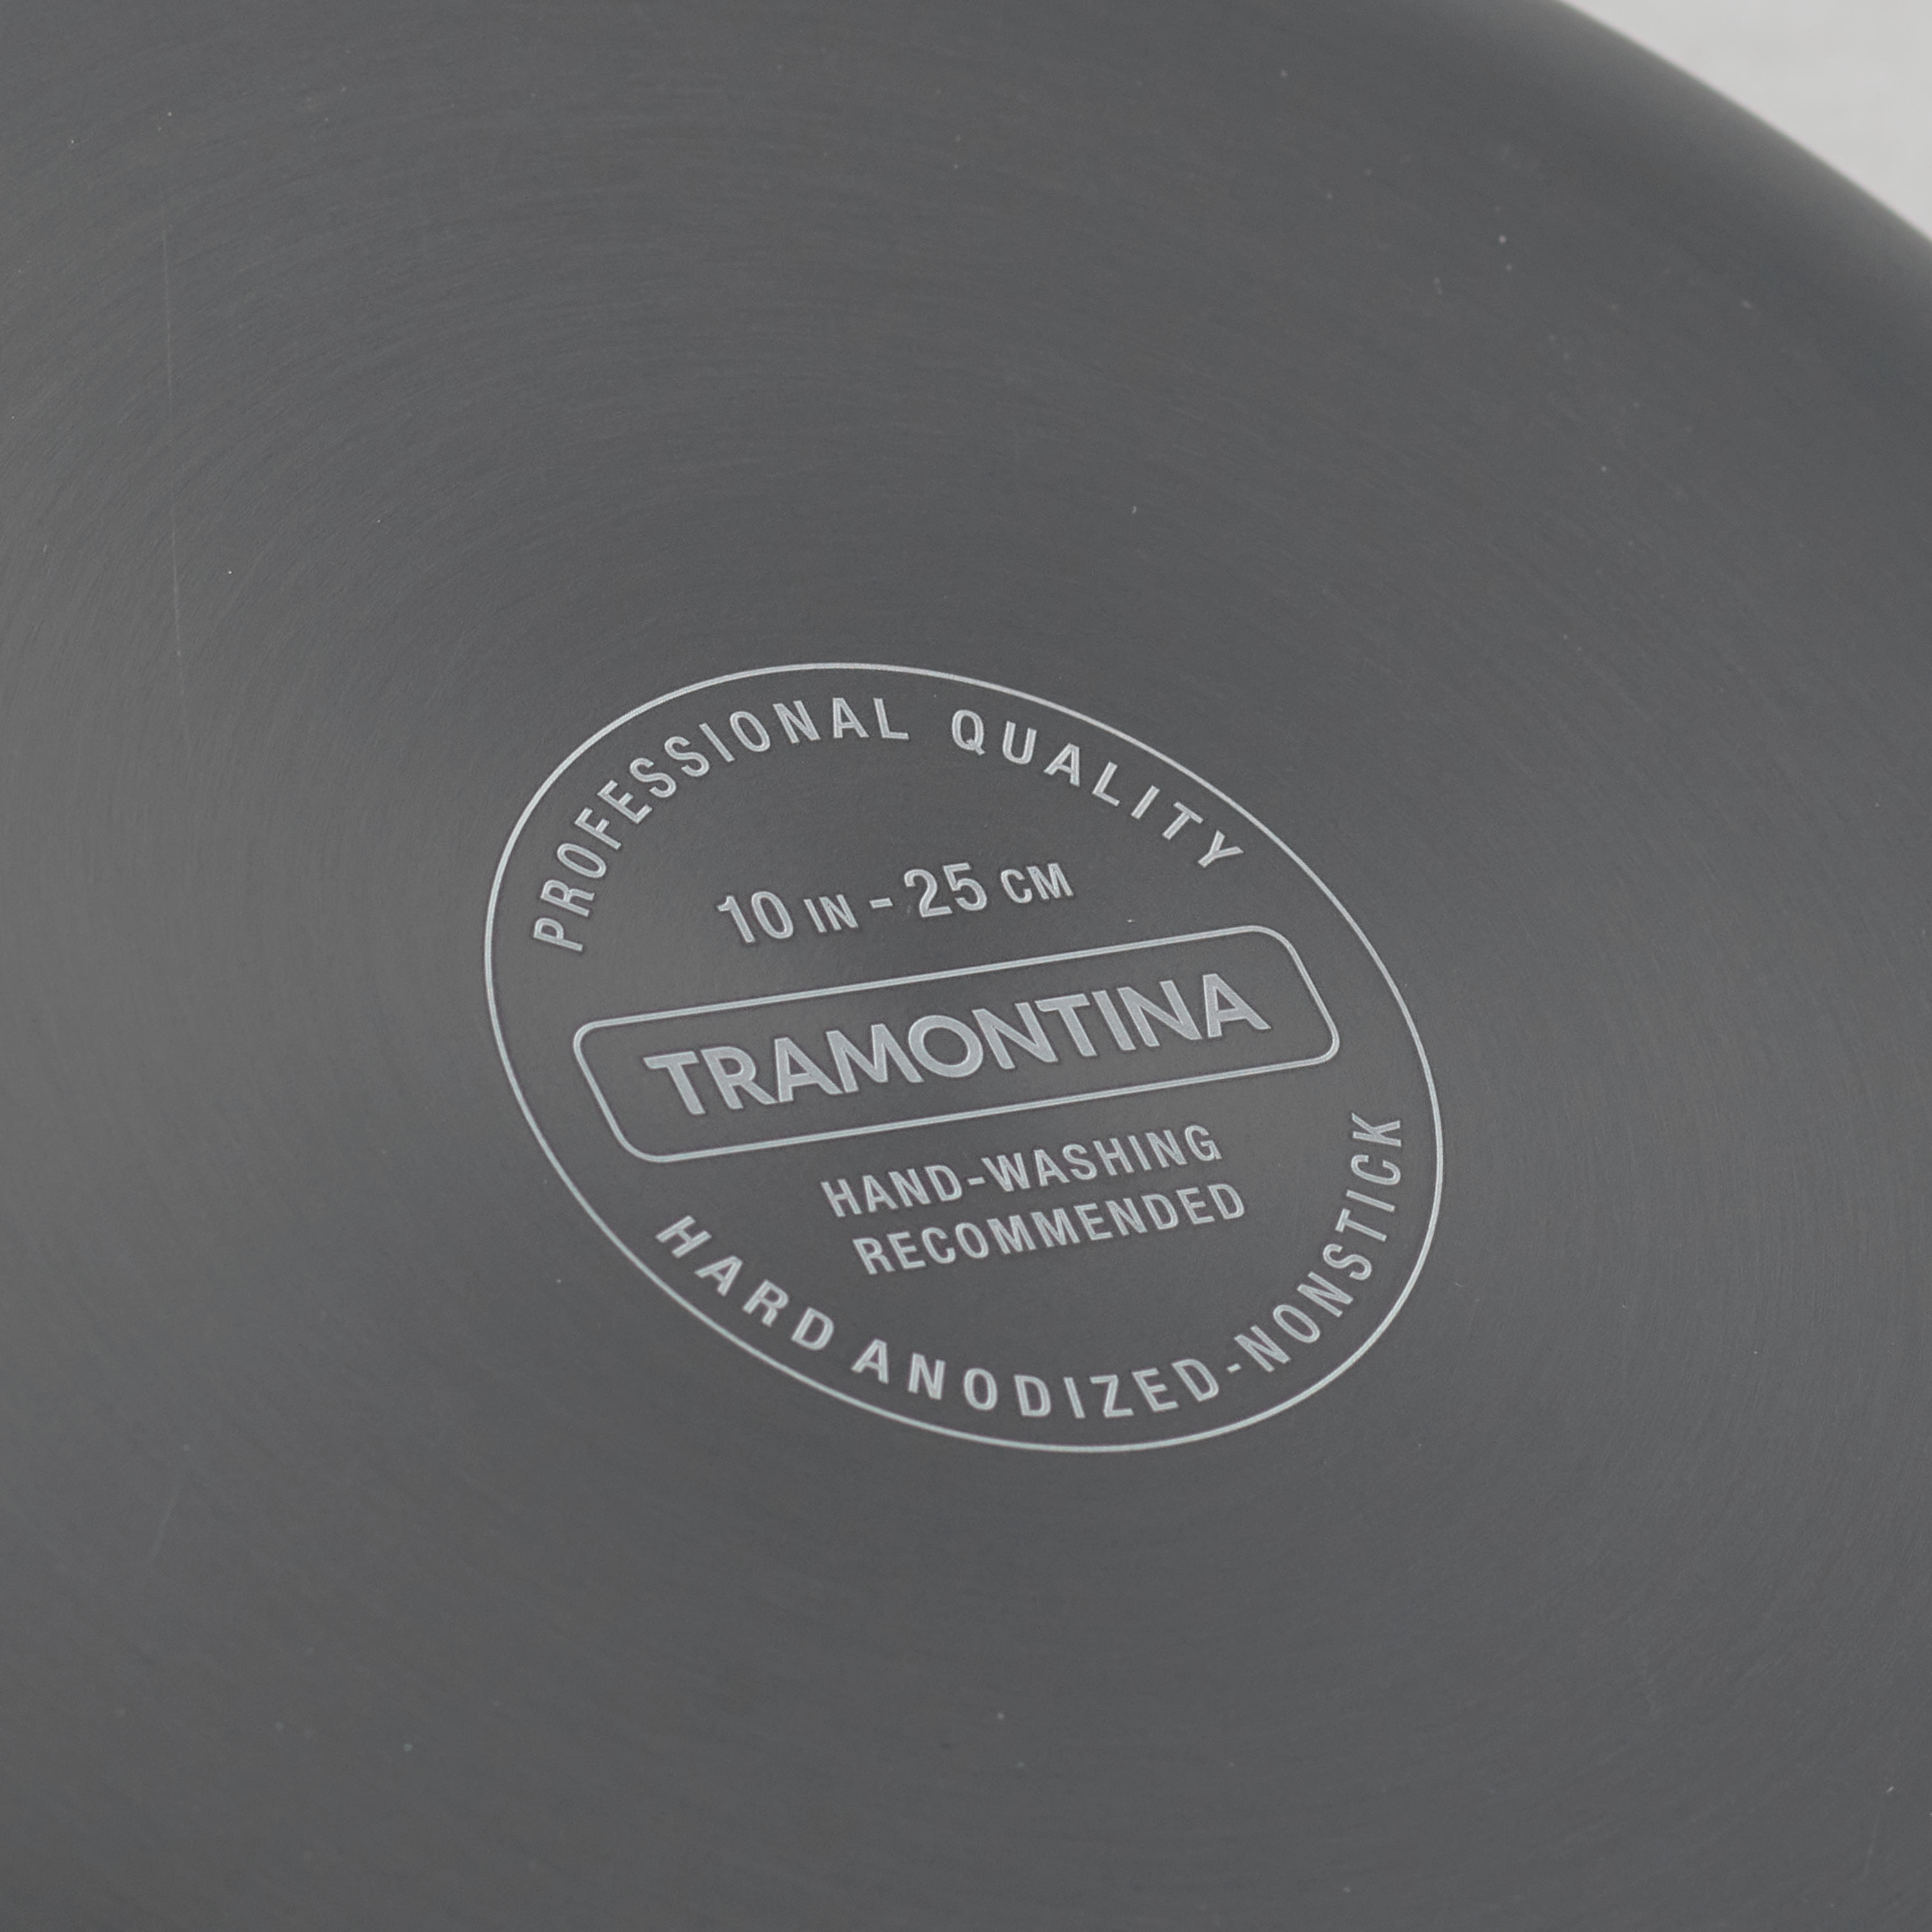 Tramontina 62155/260 Grano Frying Pan, 18/10 Steel, 2.2 Liters, Silver